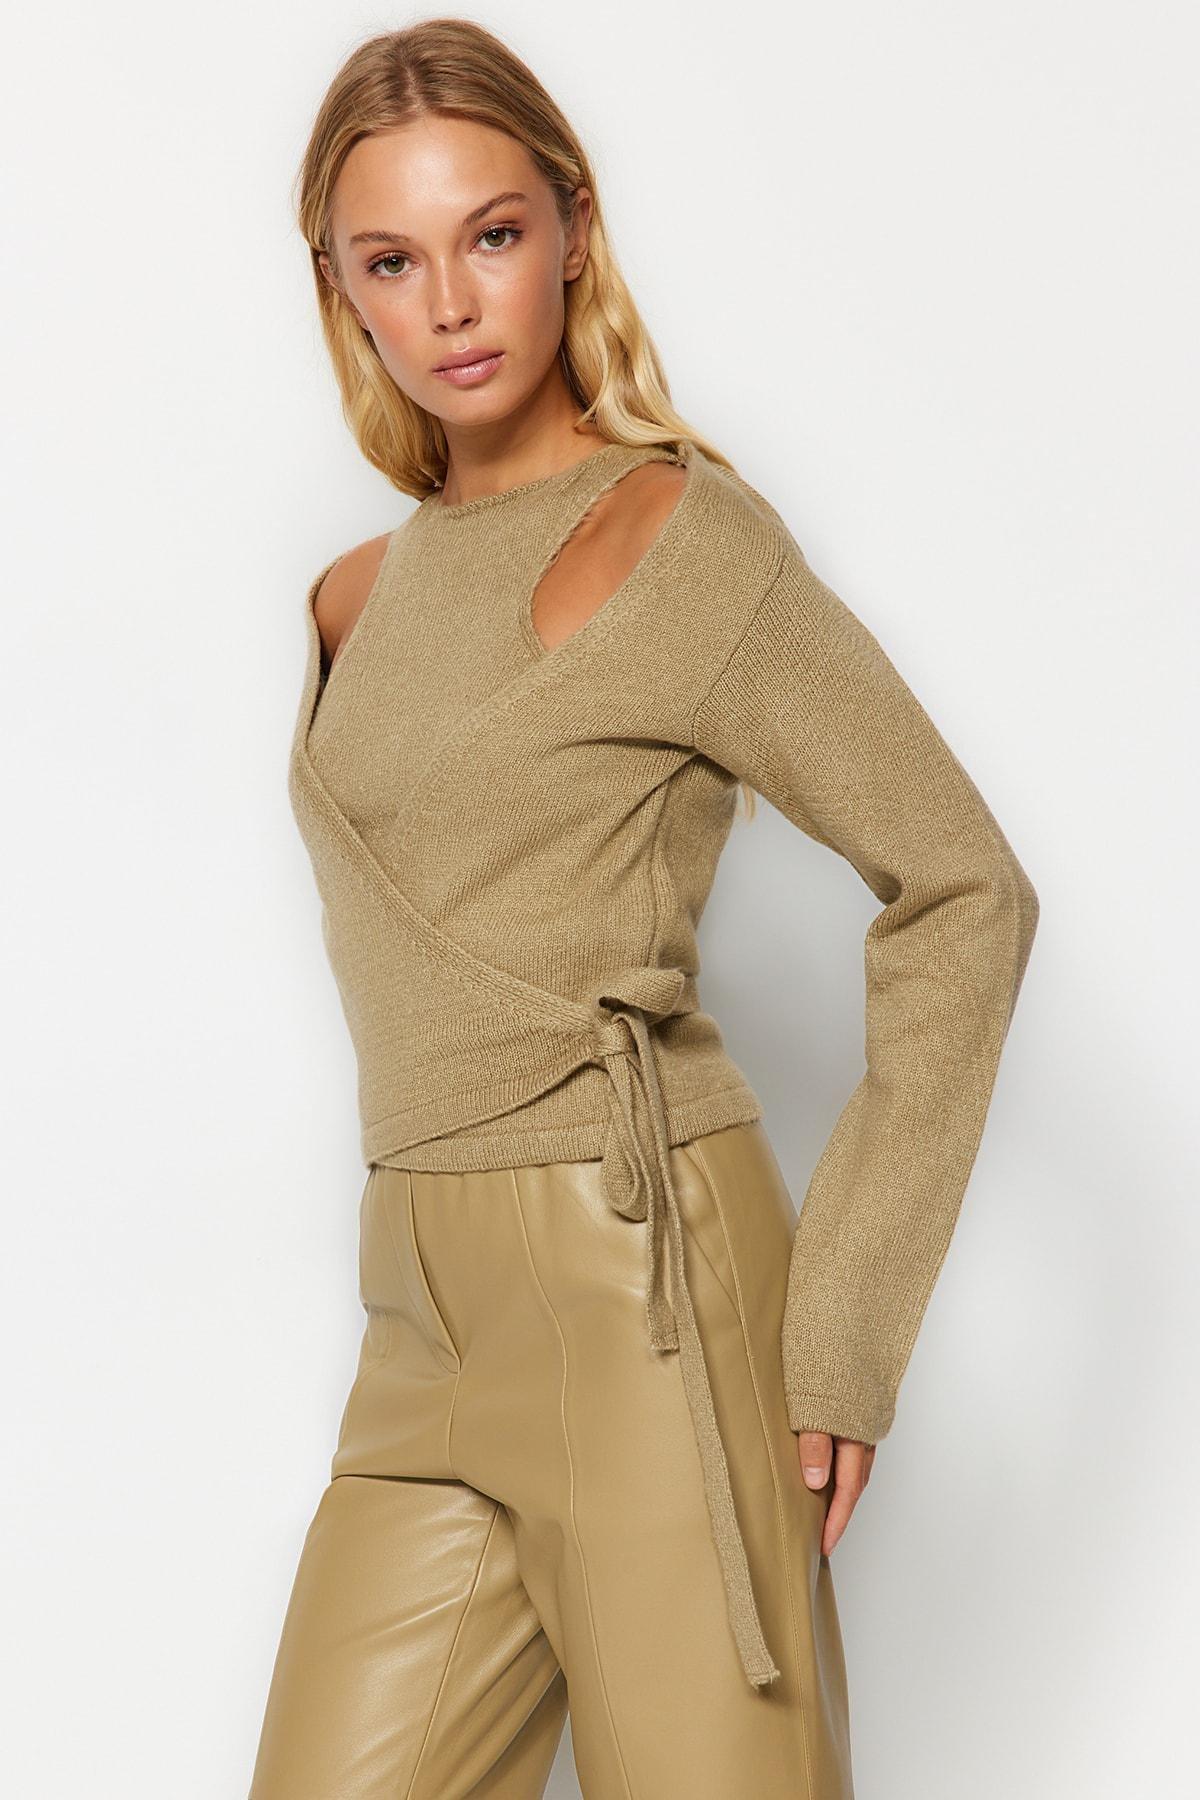 Trendyol - Beige Textured Blouse Sweater Suit